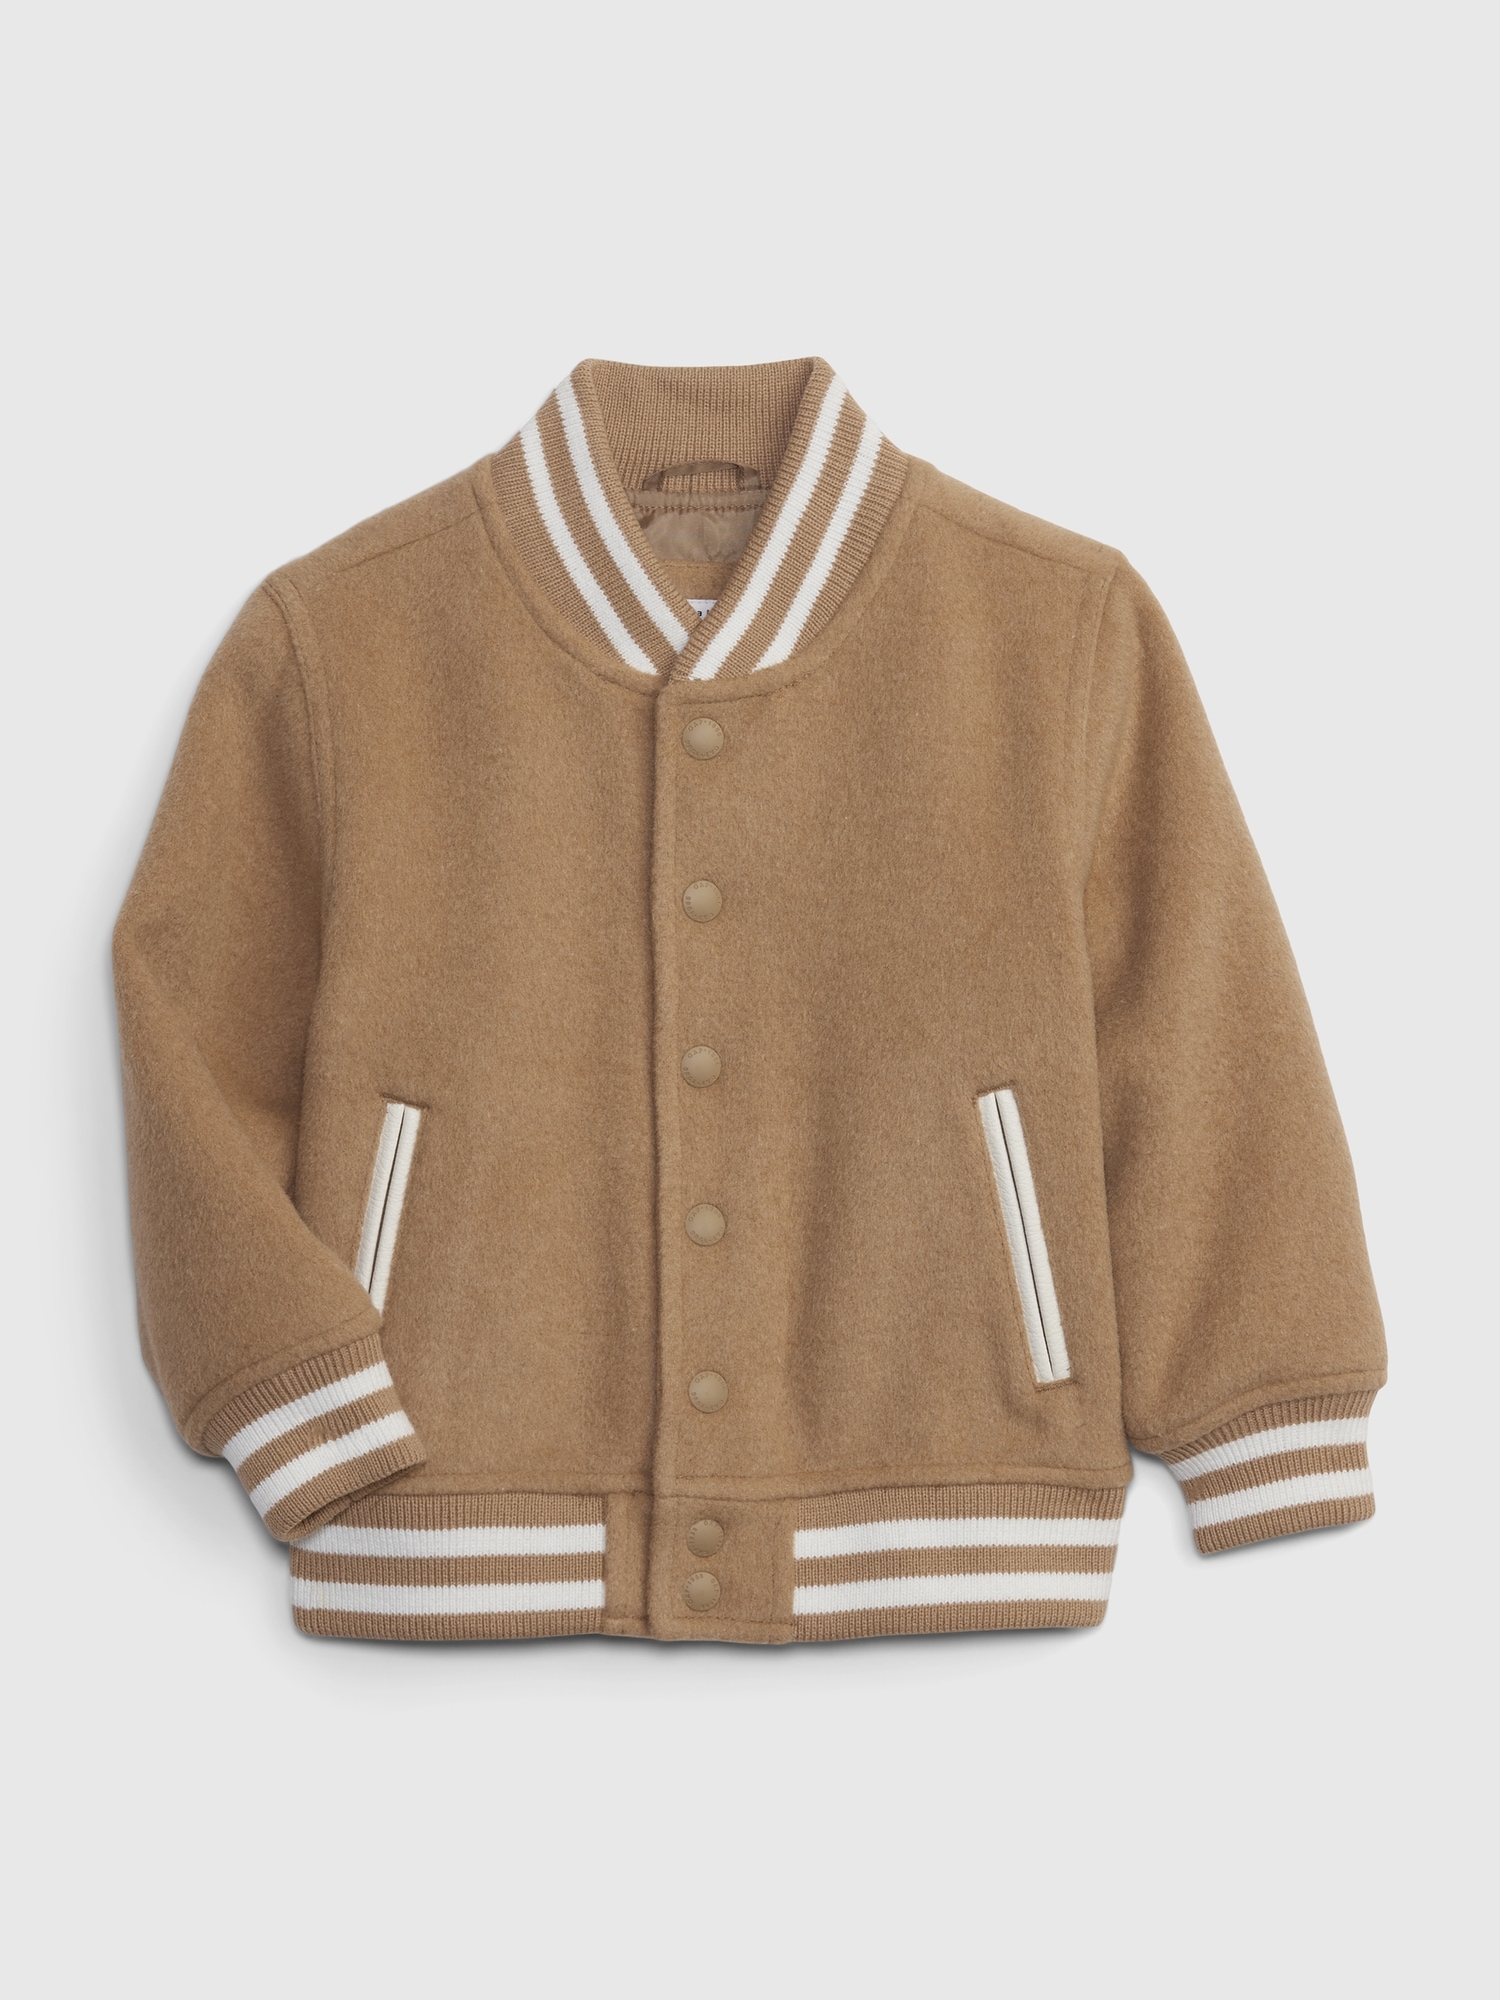 Baby Gap Letterman Varsity Jacket Sweater Outerwear 6-9 Months | Baby gap,  Sweater jacket, Varsity jacket